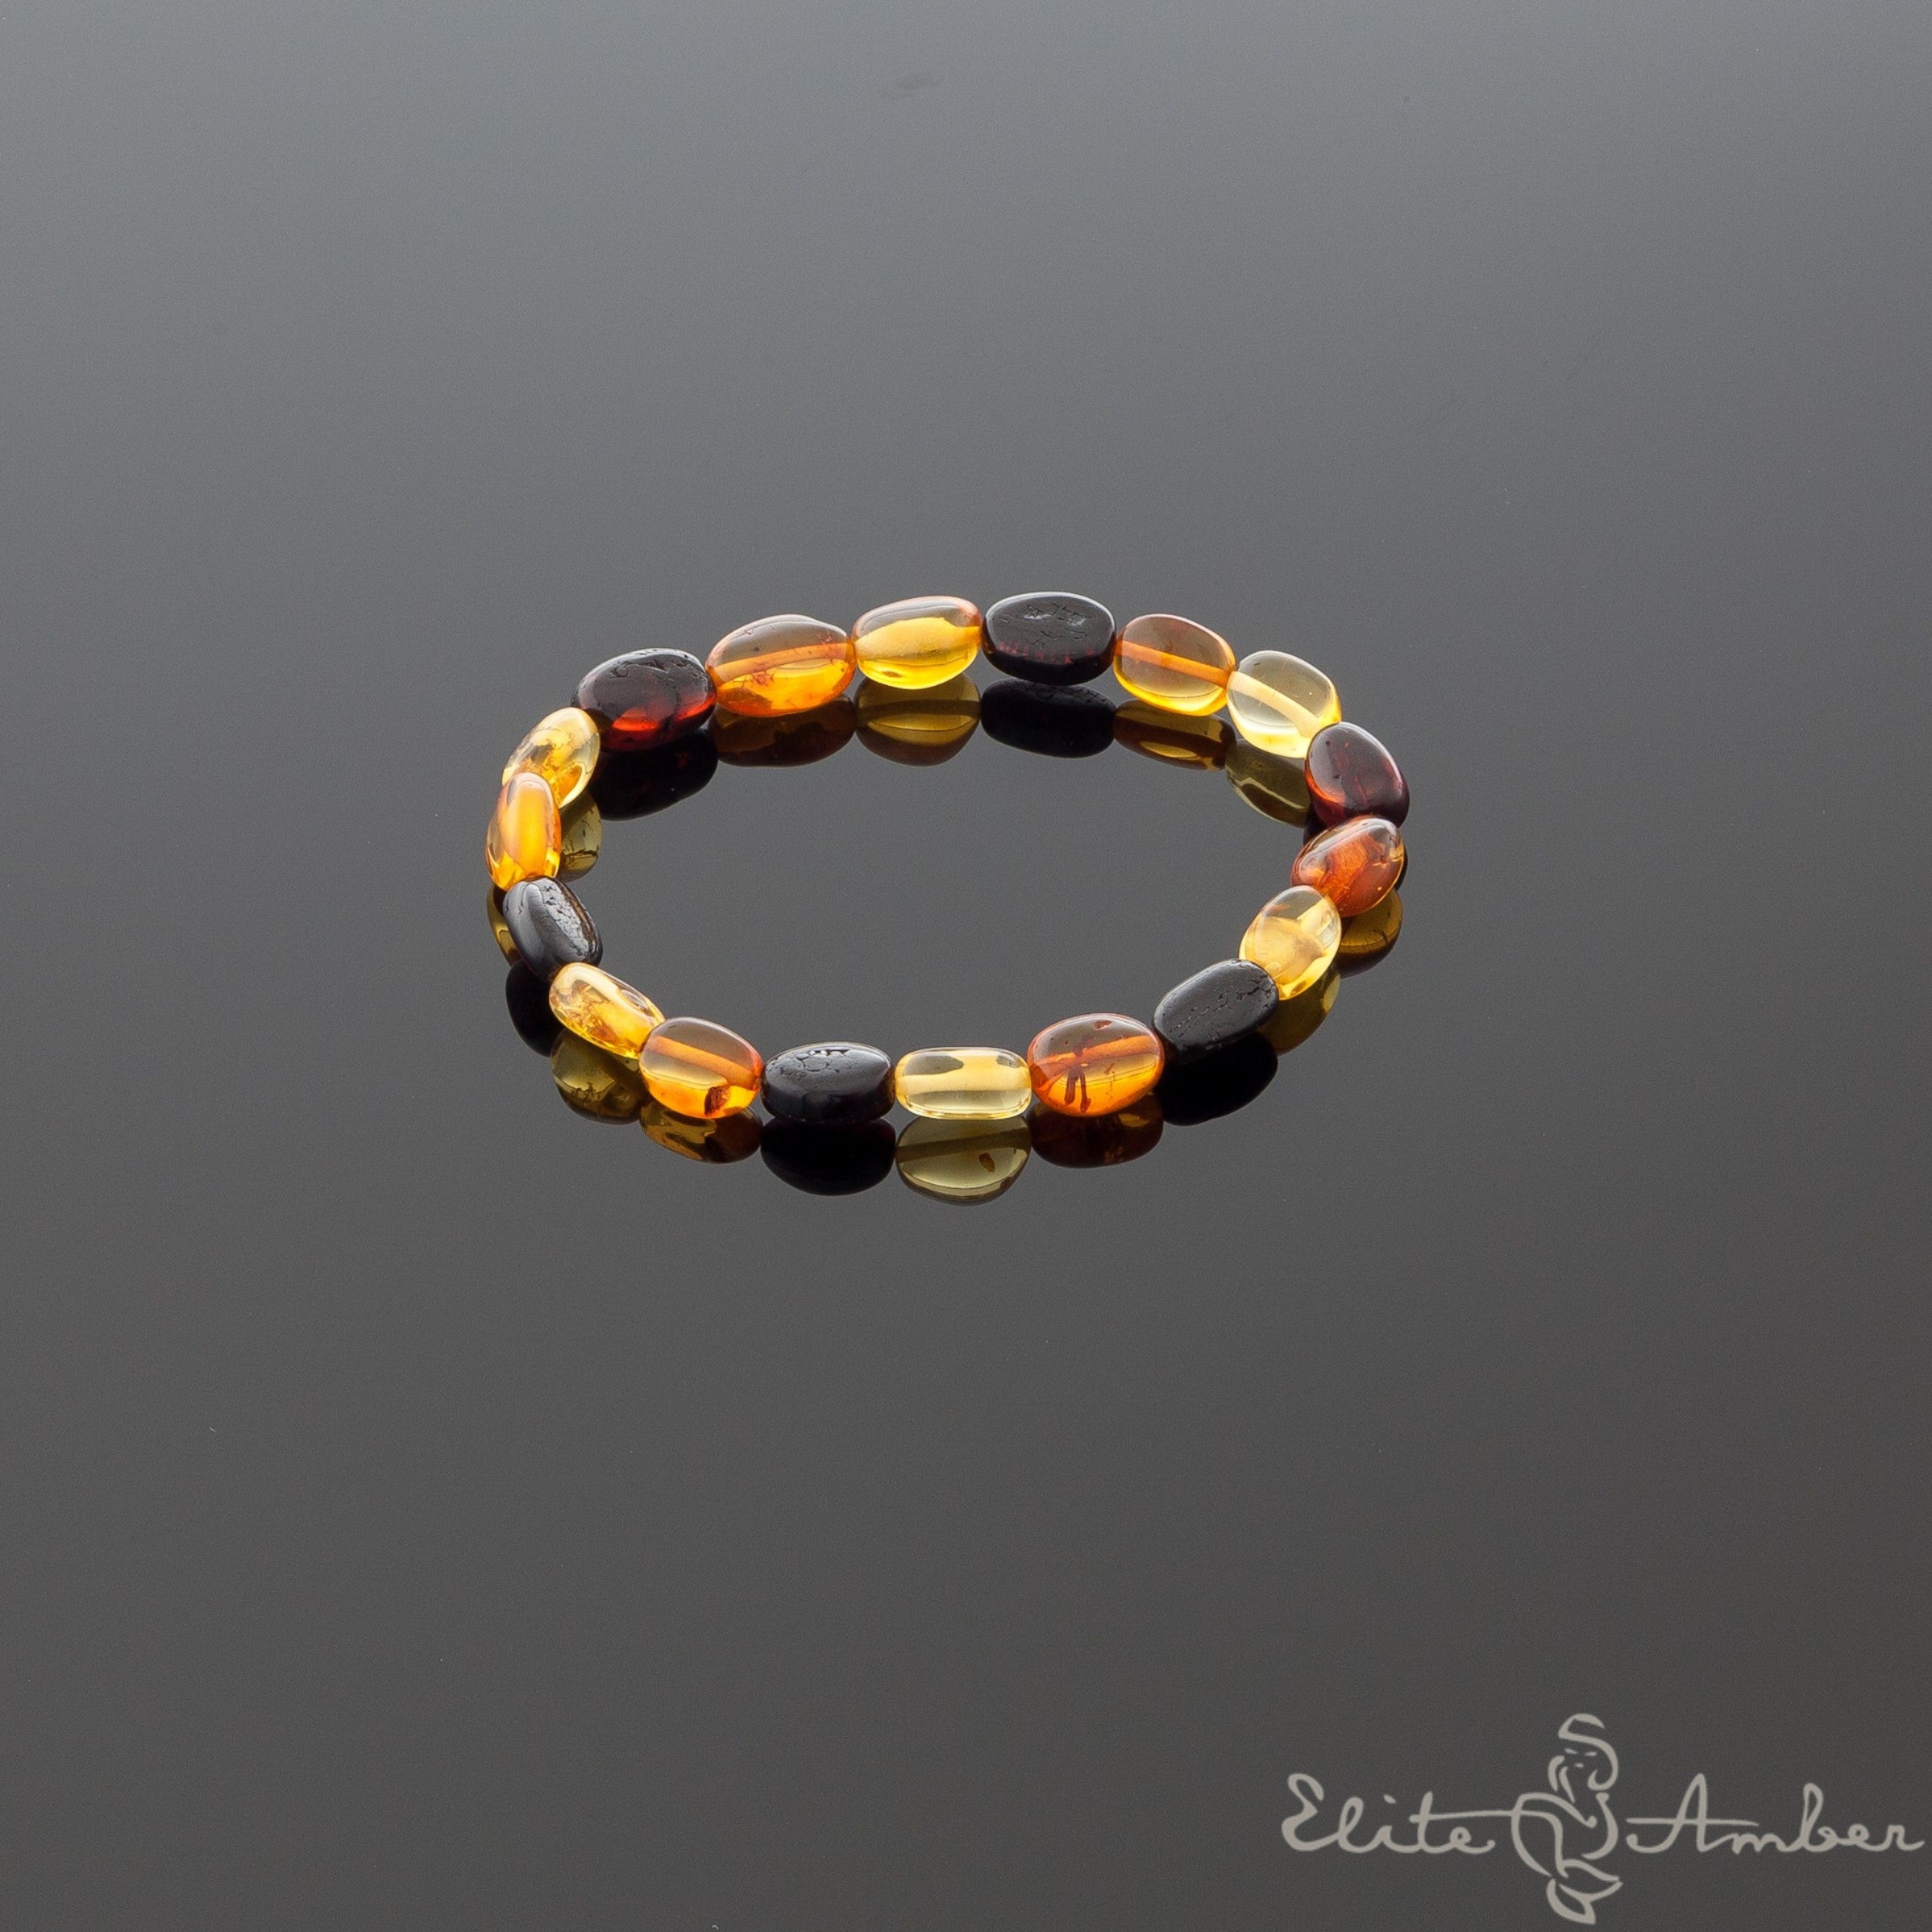 Amber bracelet "Multi color amber pebbles"